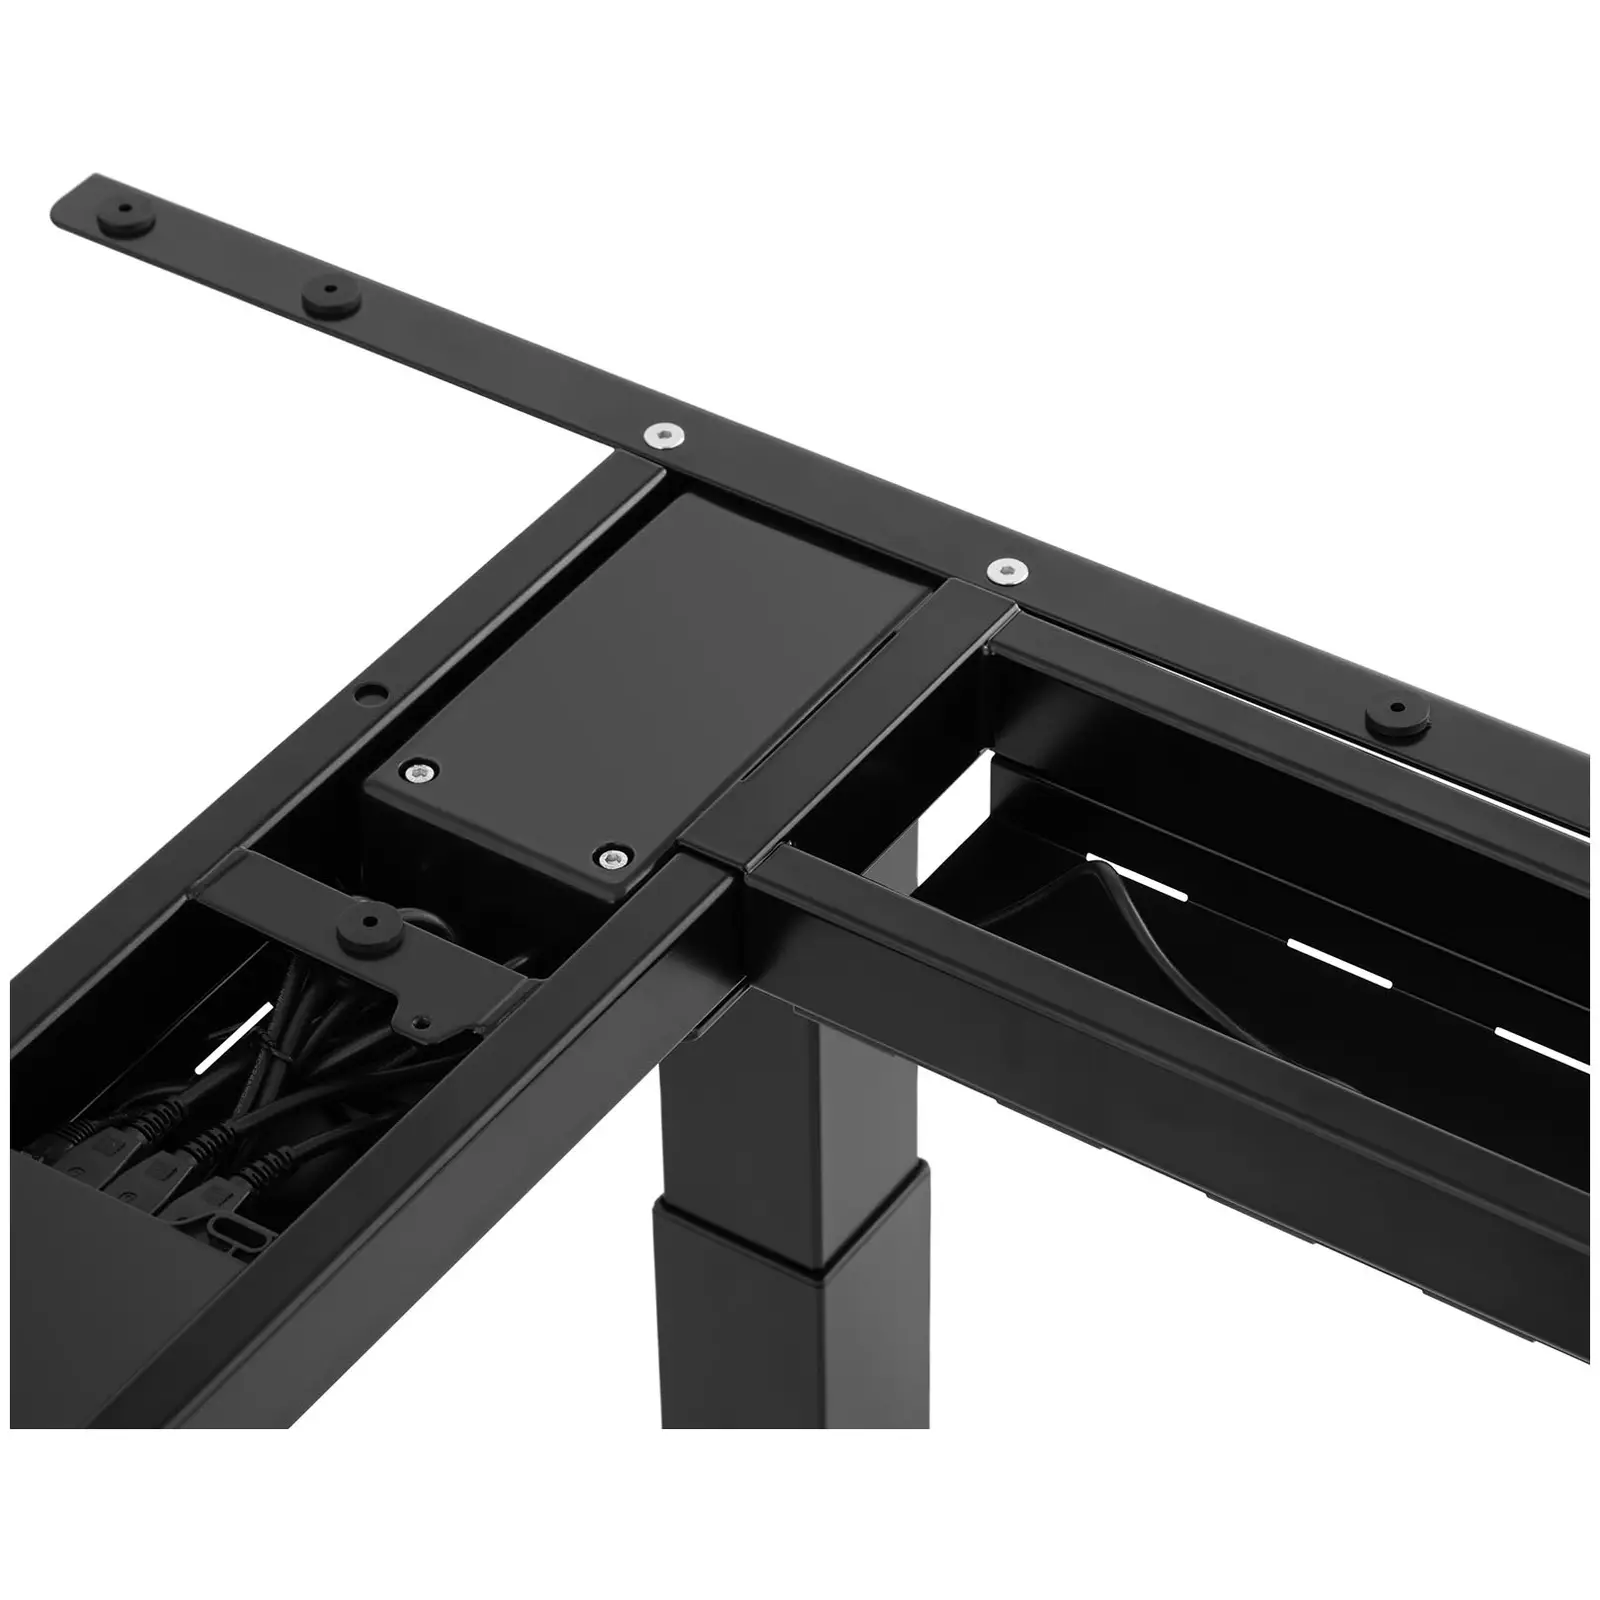 Corner Standing Desk Frame - height-adjustable - for sitting & standing - Height: 69-118 cm - Width: 90-150 cm (left) / 110-190 cm (right) - Angle: 90 ° - 150 kg